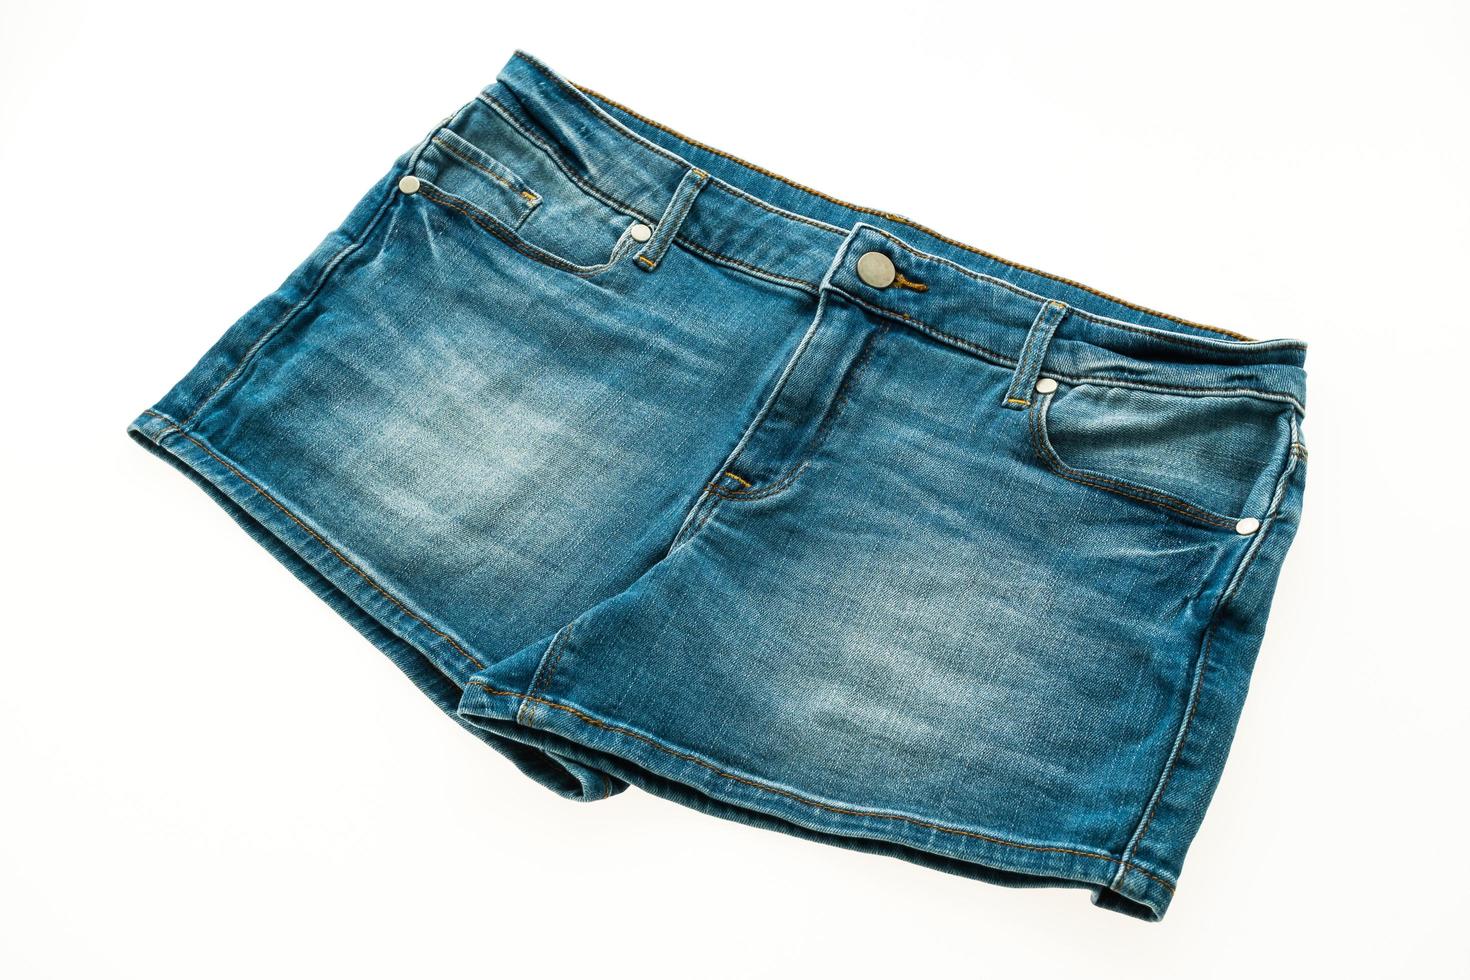 Fashion short jean pants for women photo